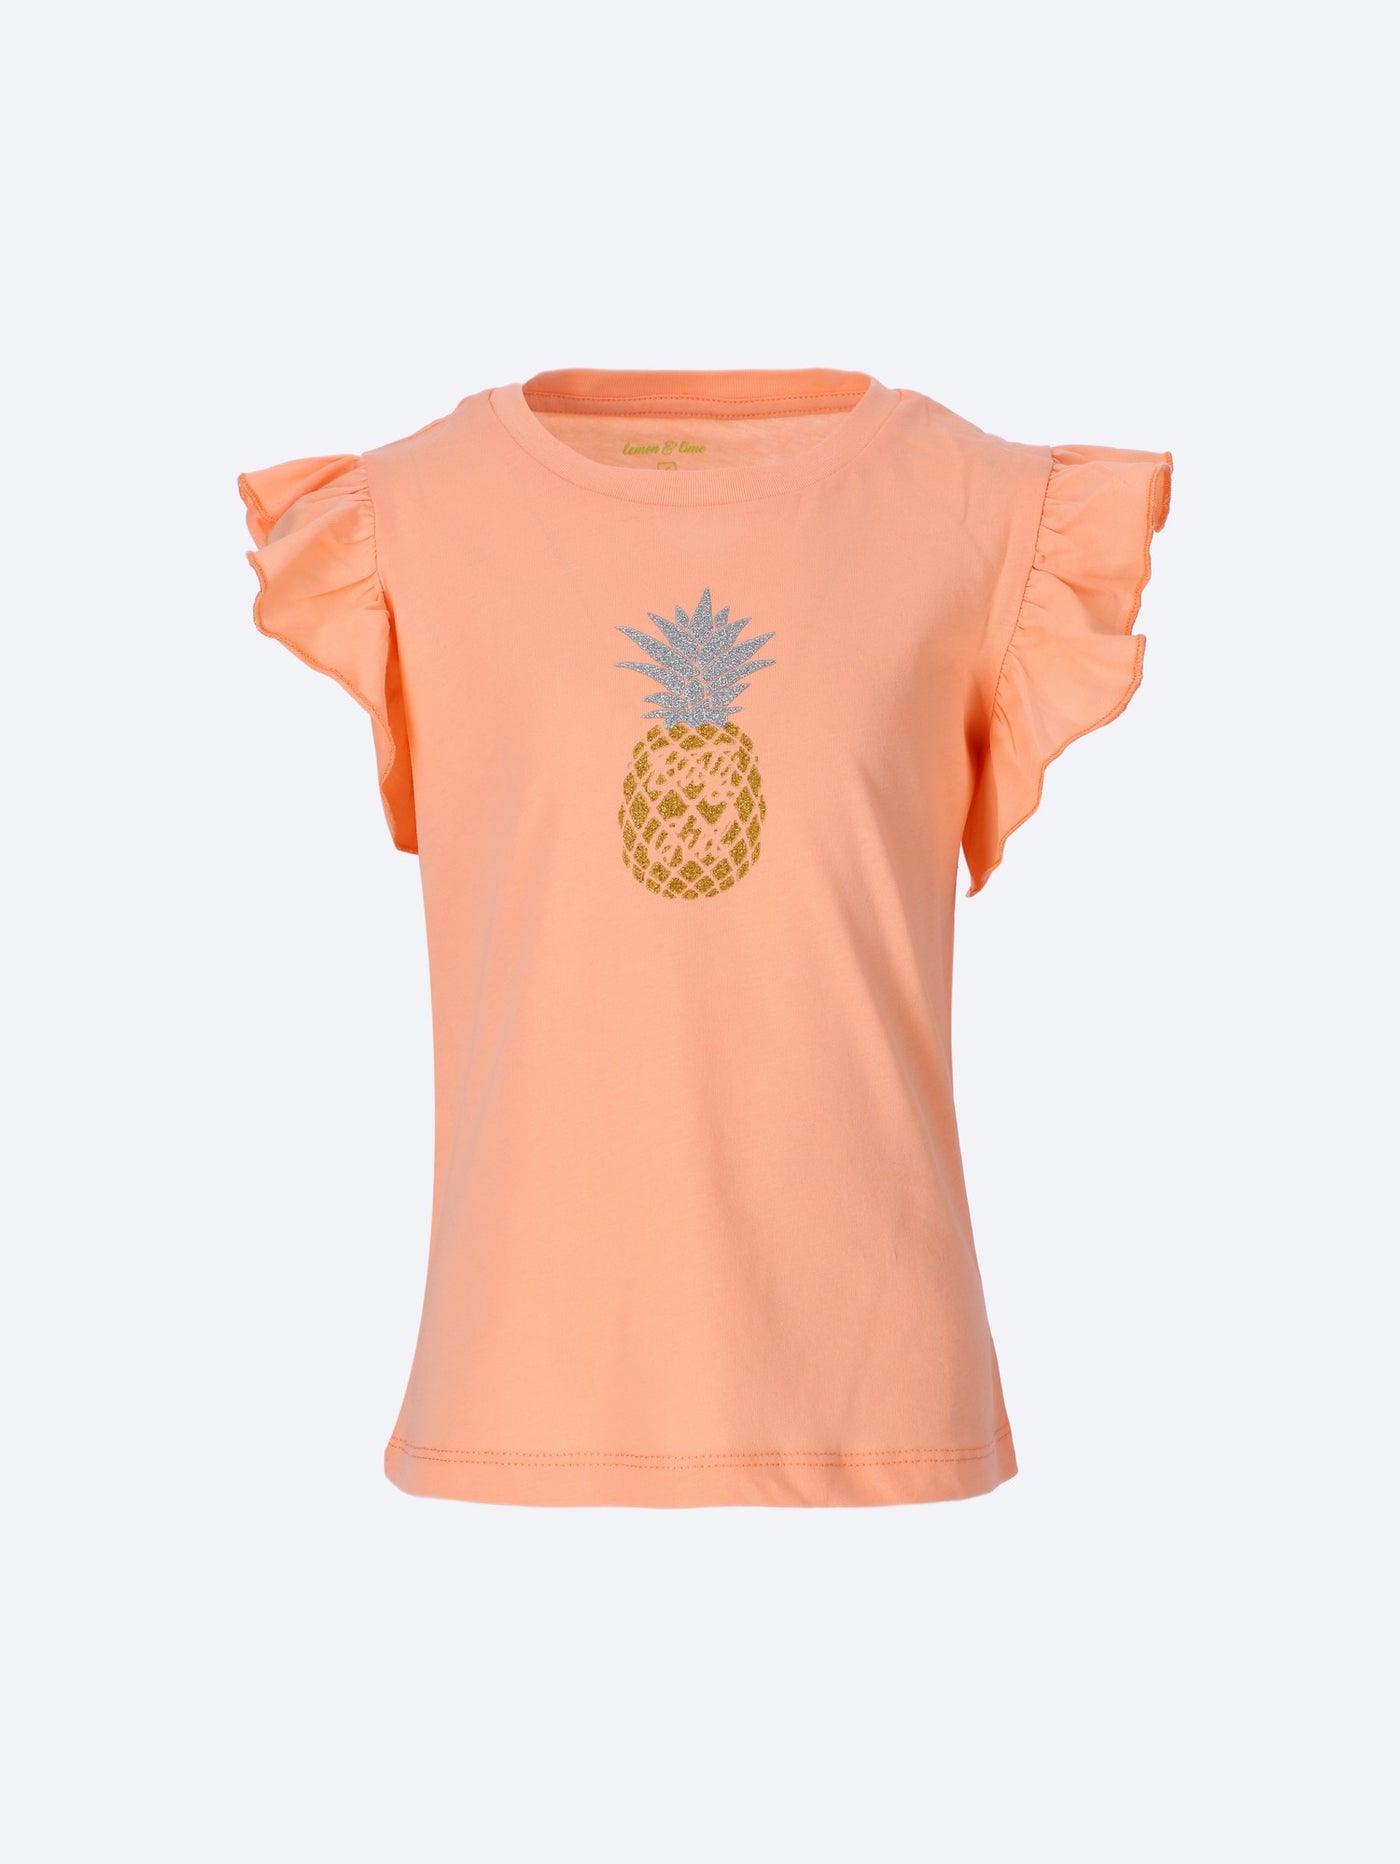 Ozone Kids Girls Pineapple Frill Short Sleeve Top